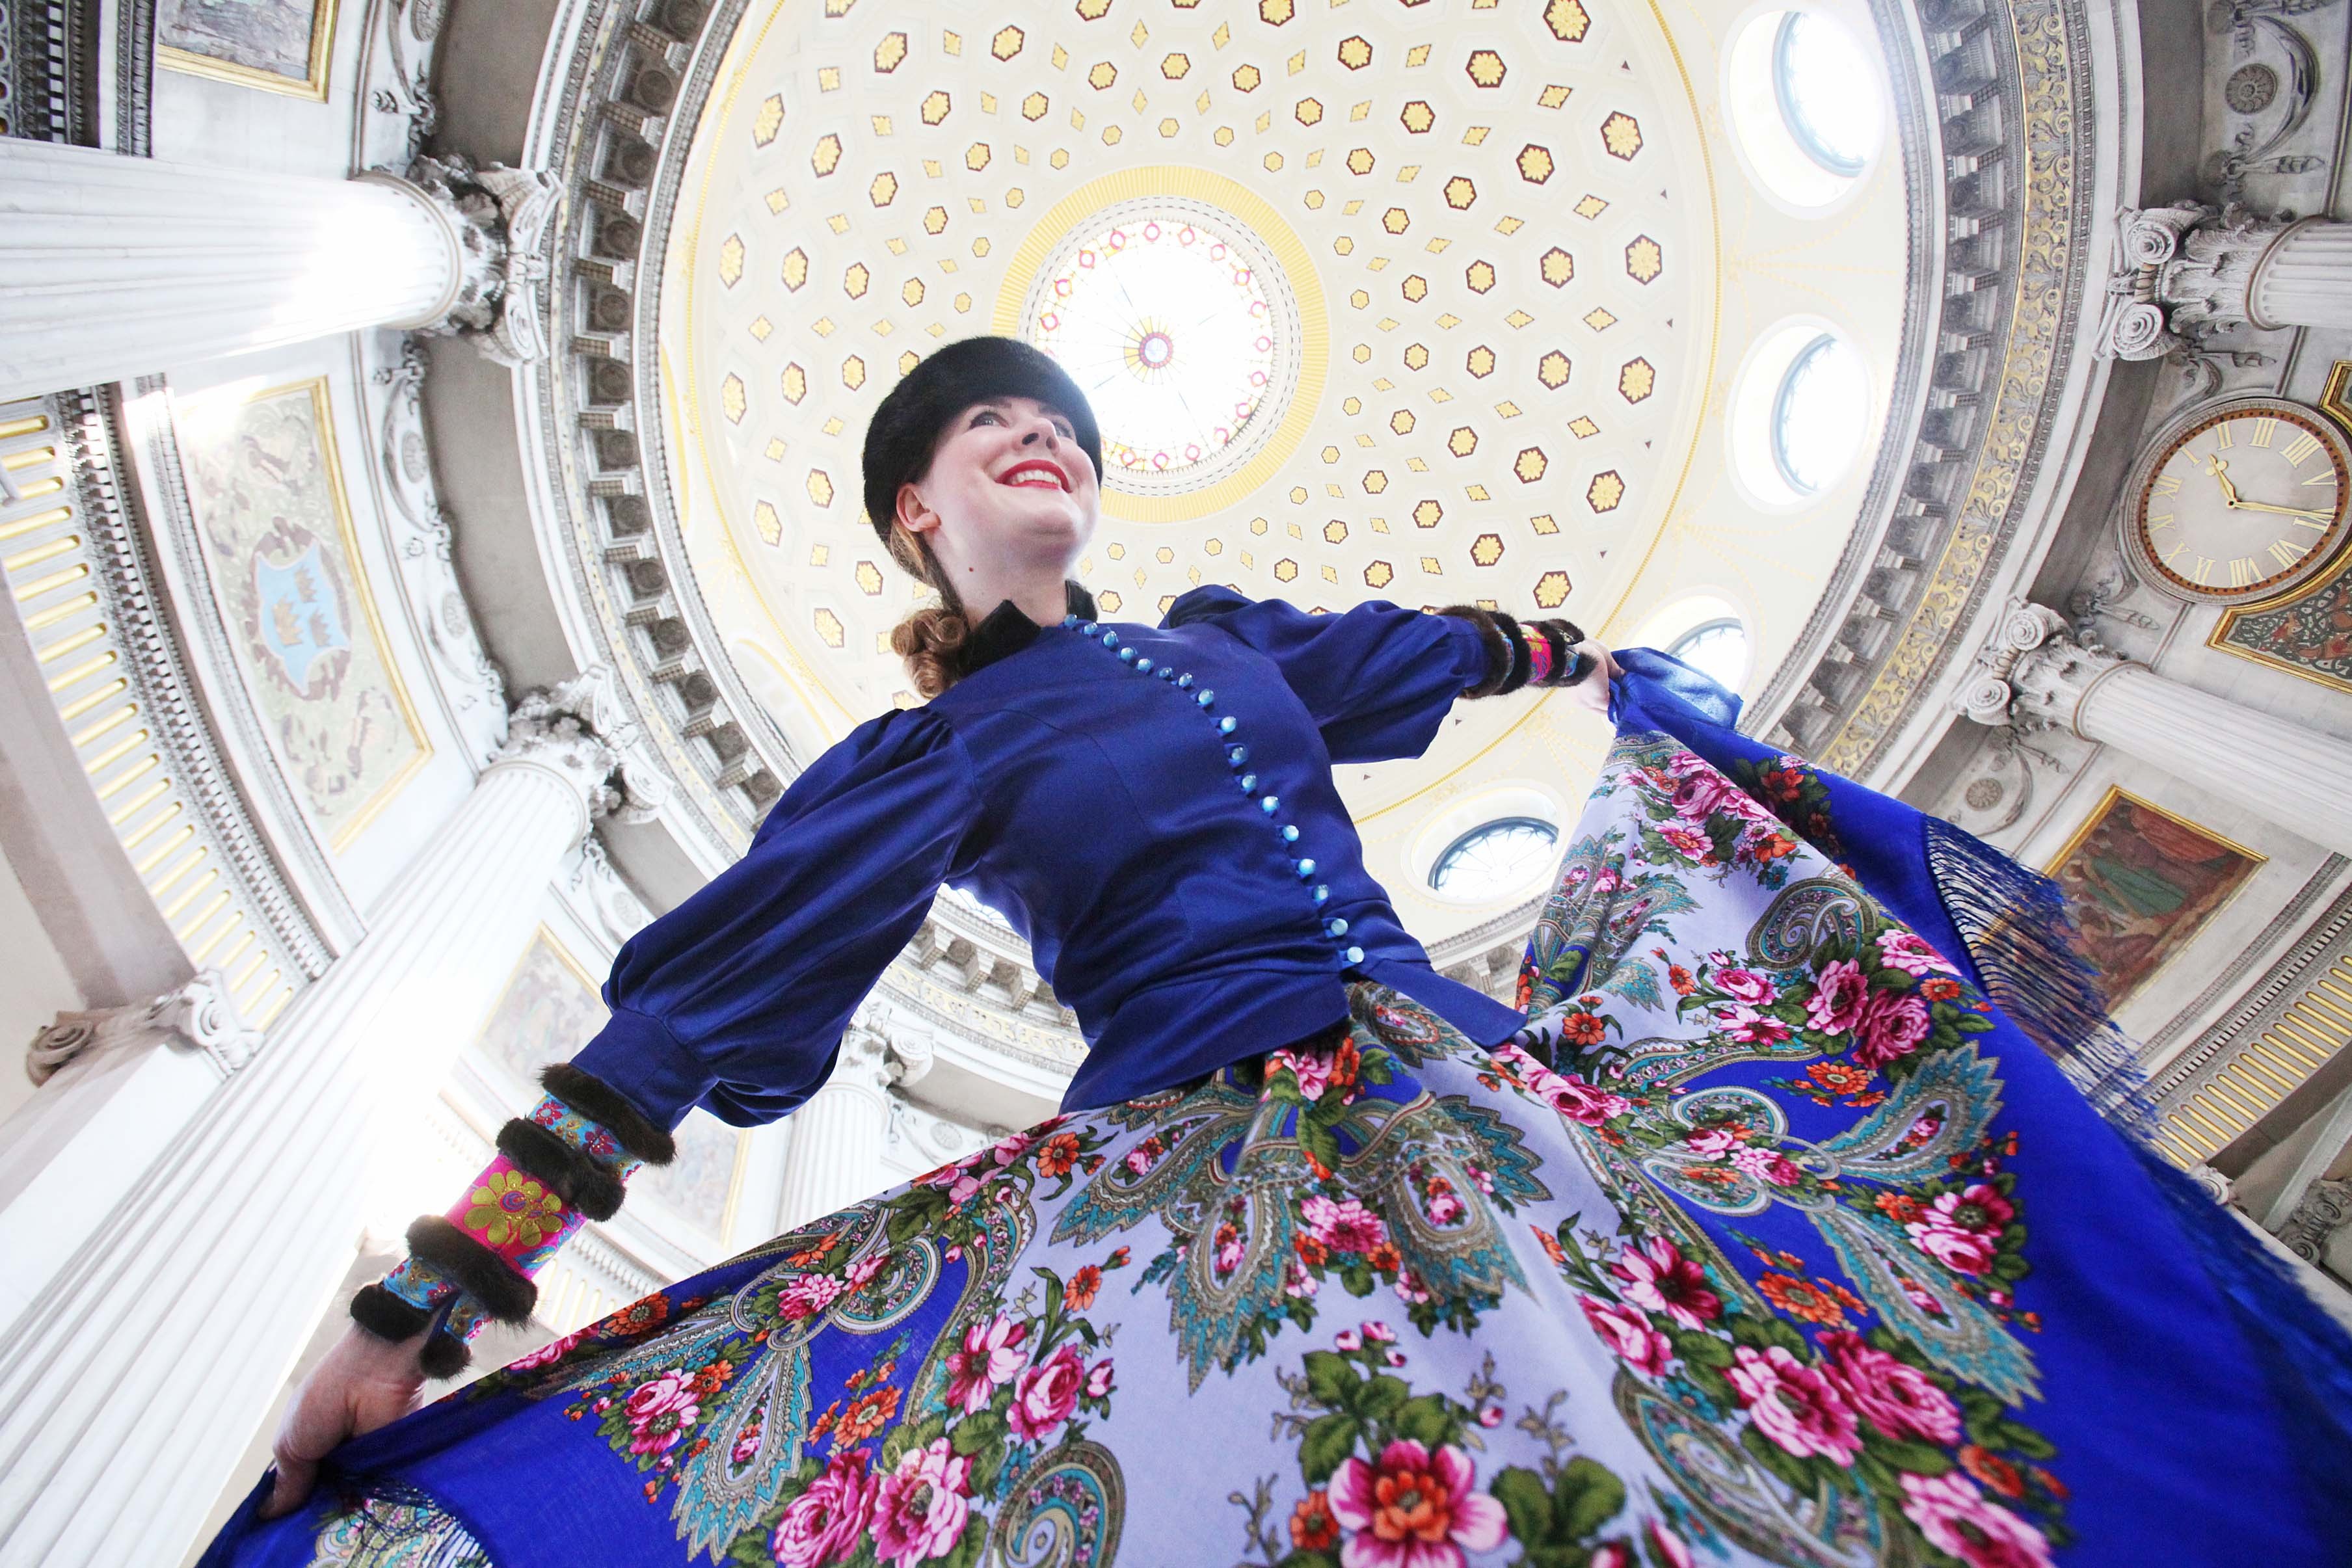 The Dublin City Festival of Russian Culture